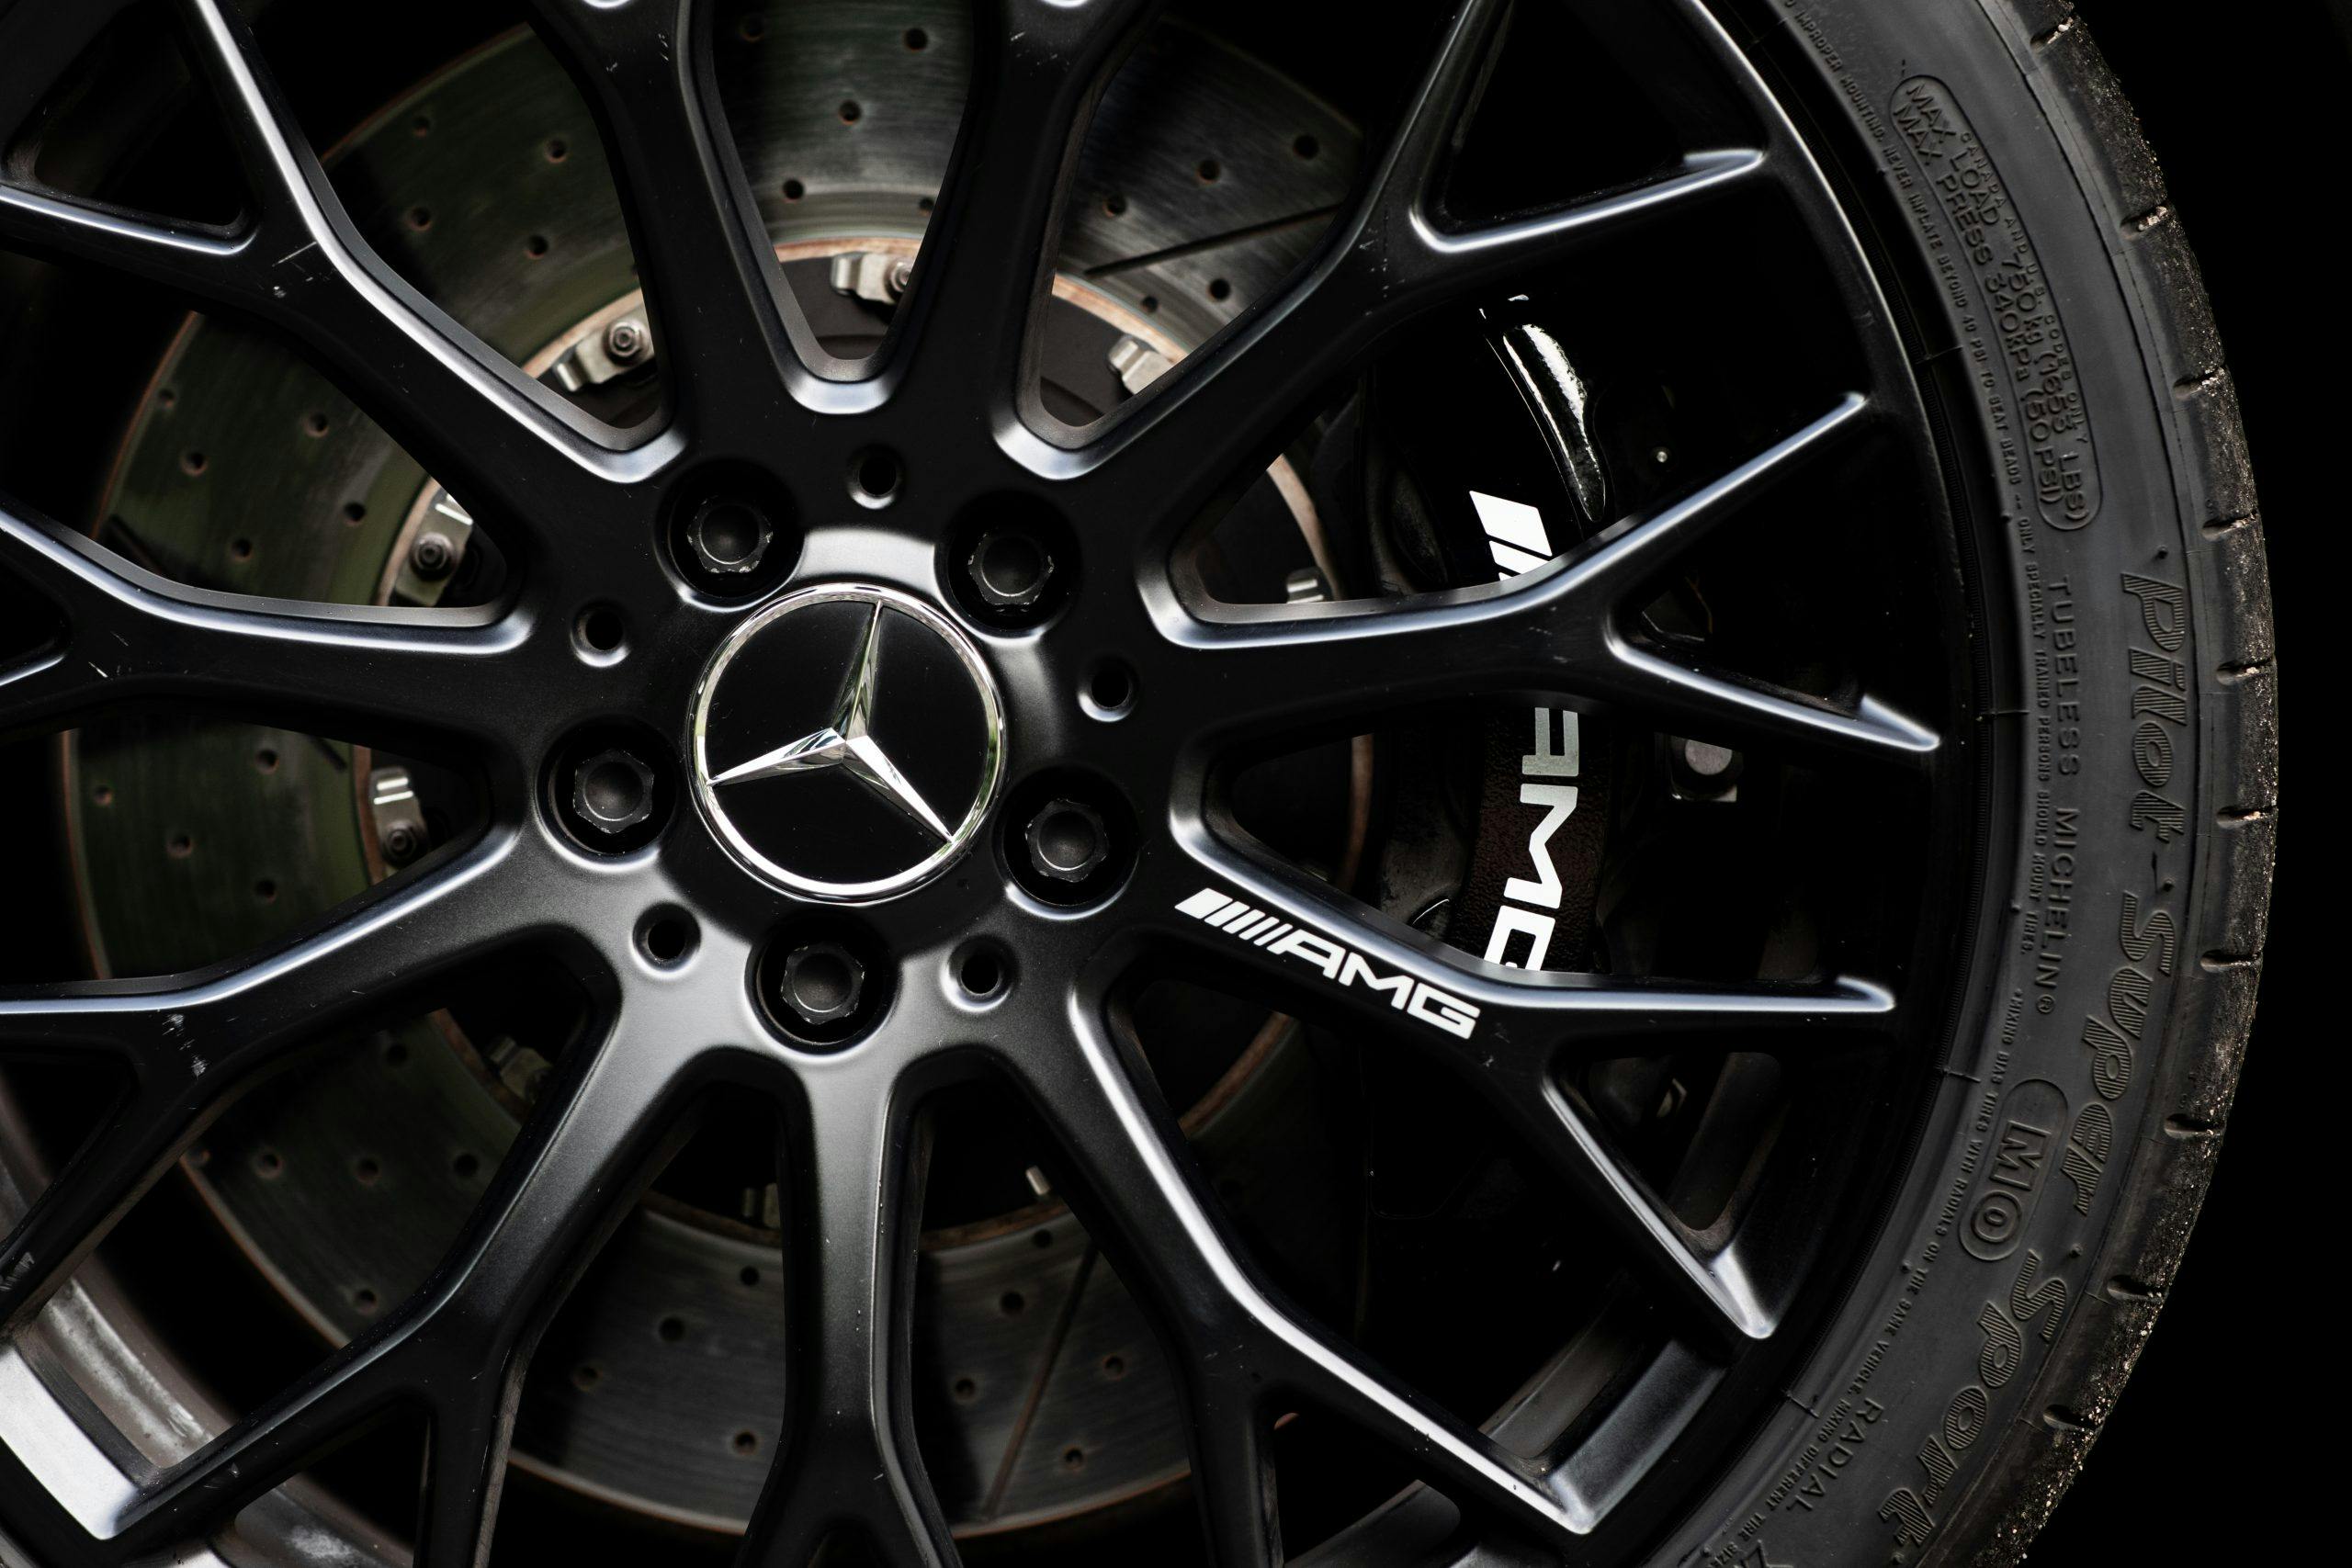 2021 Mercedes-AMG GT Stealth Edition wheel detail